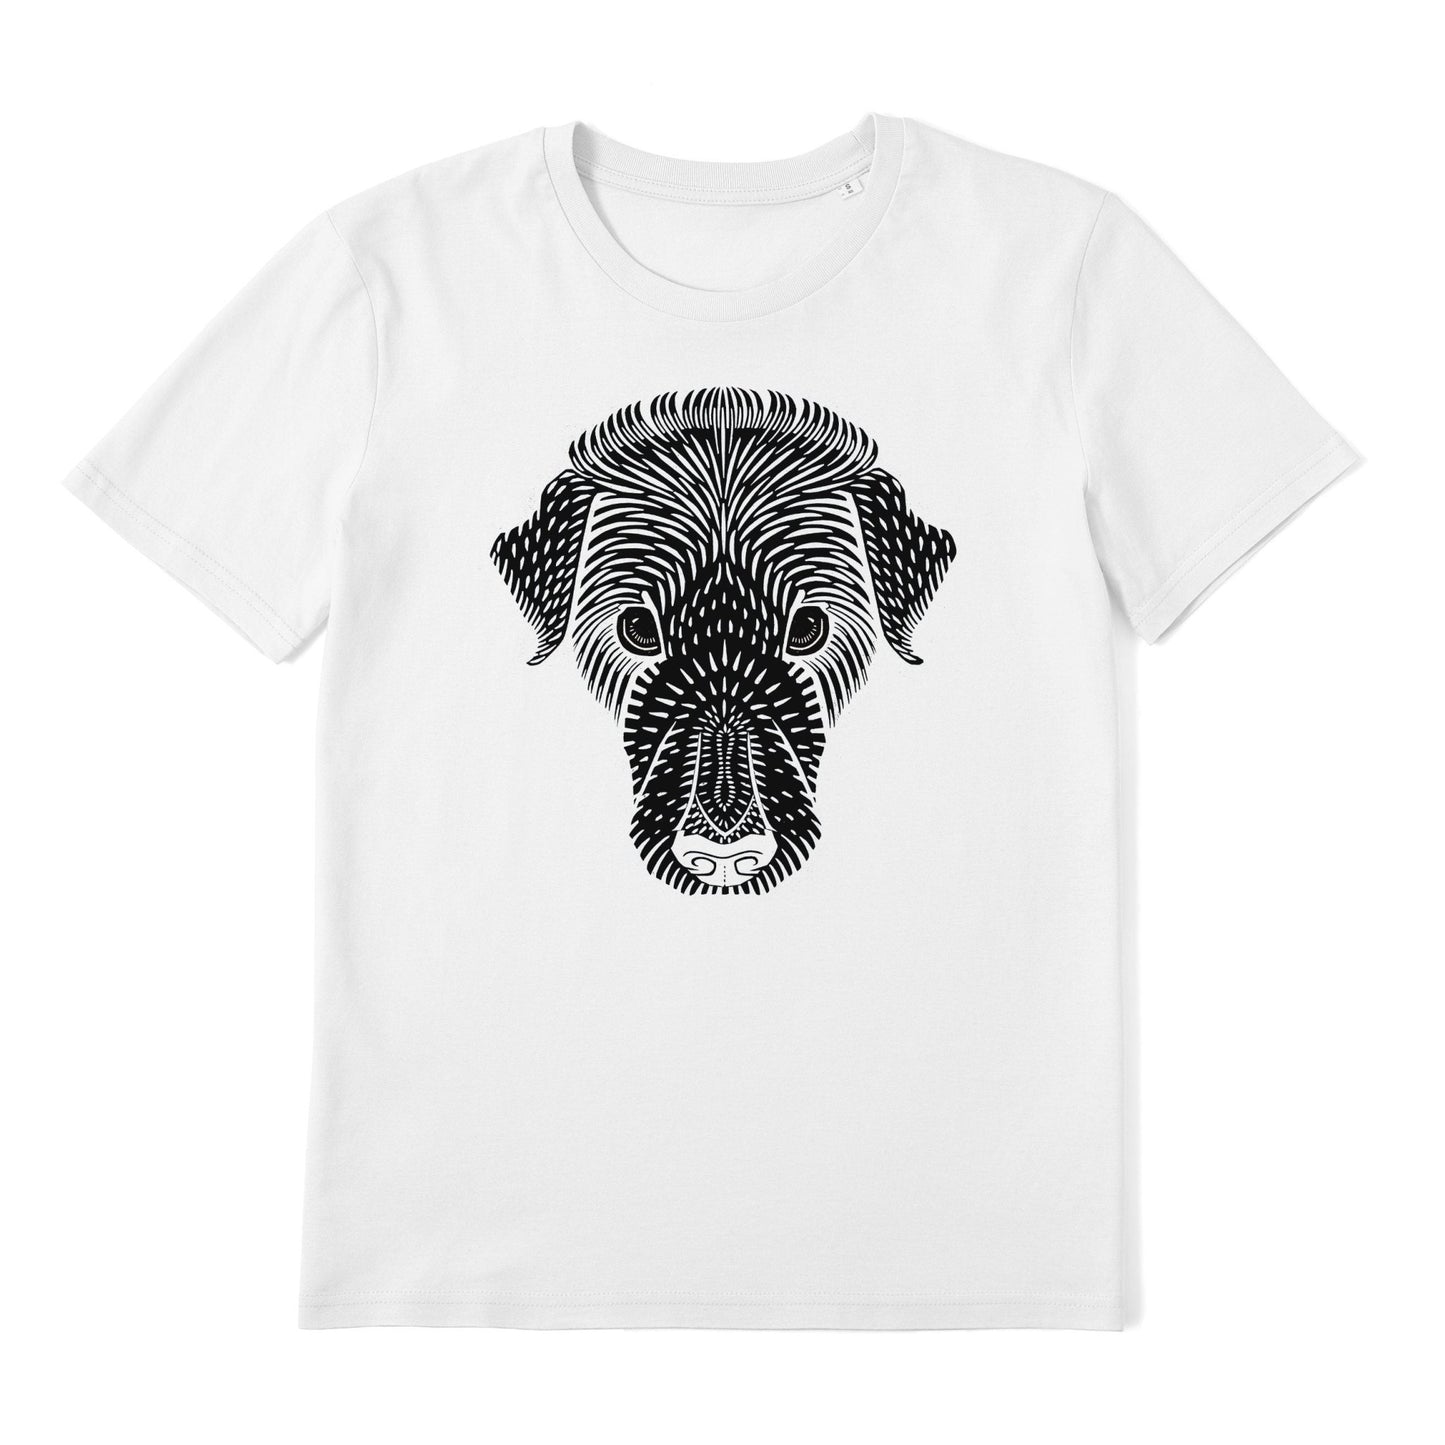 JULIE DE GRAAG - Dog's Head T-Shirt - Pathos Studio - T-Shirts